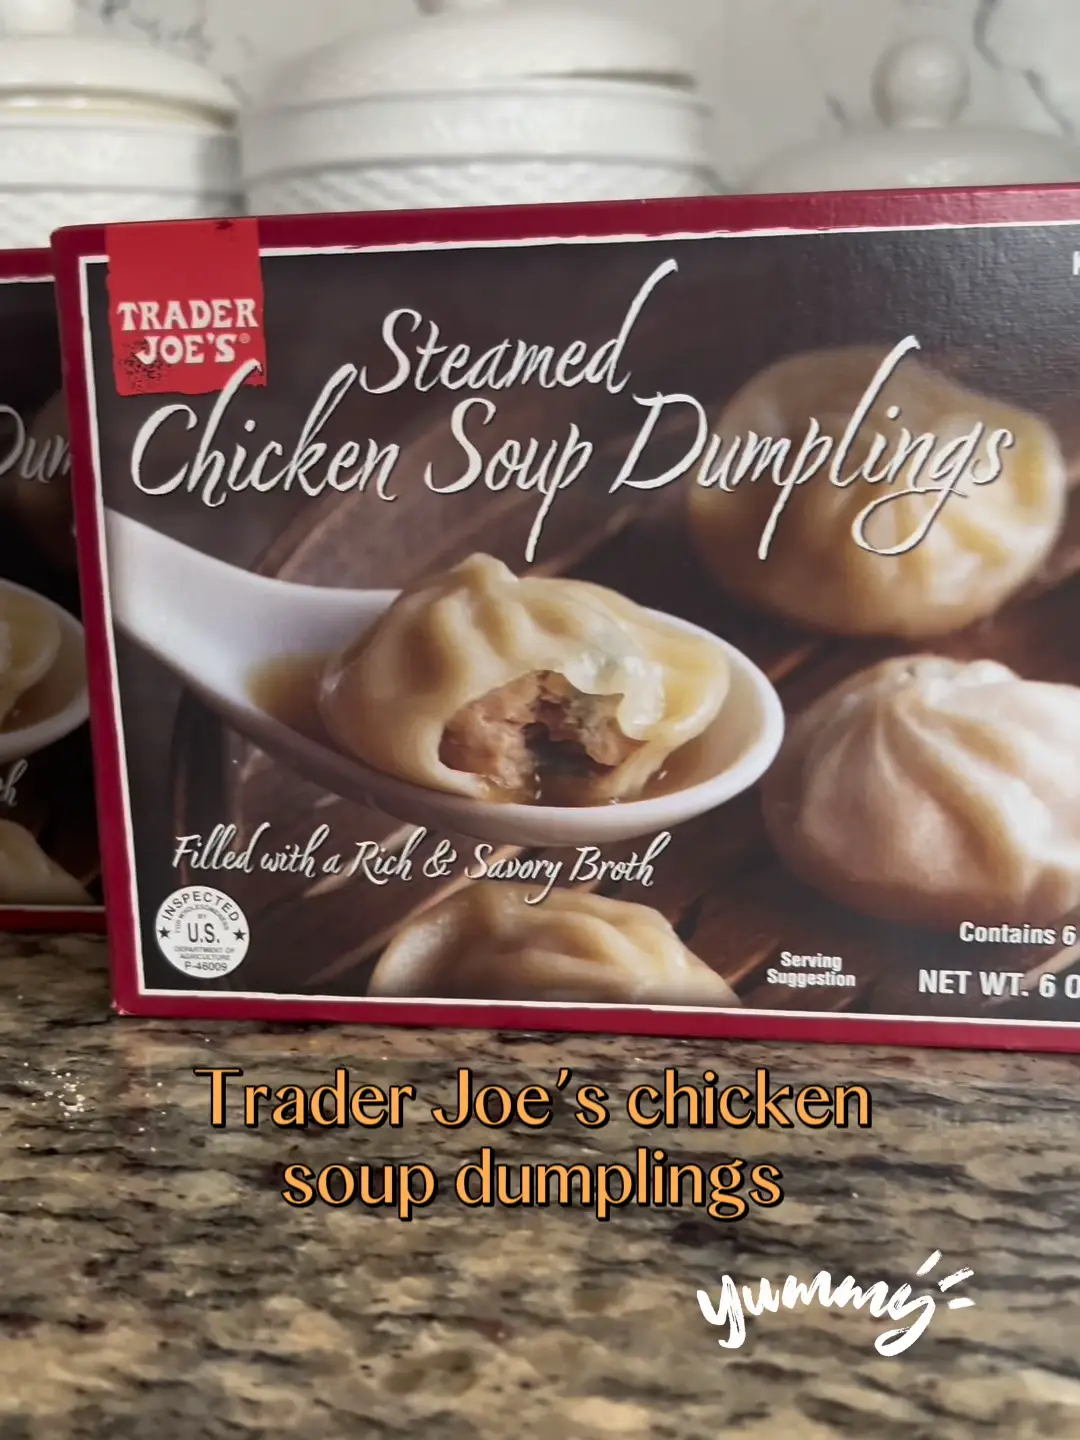 Trader Joe's soup dumplings, Yummy!, Like_the_Grand_Canyon